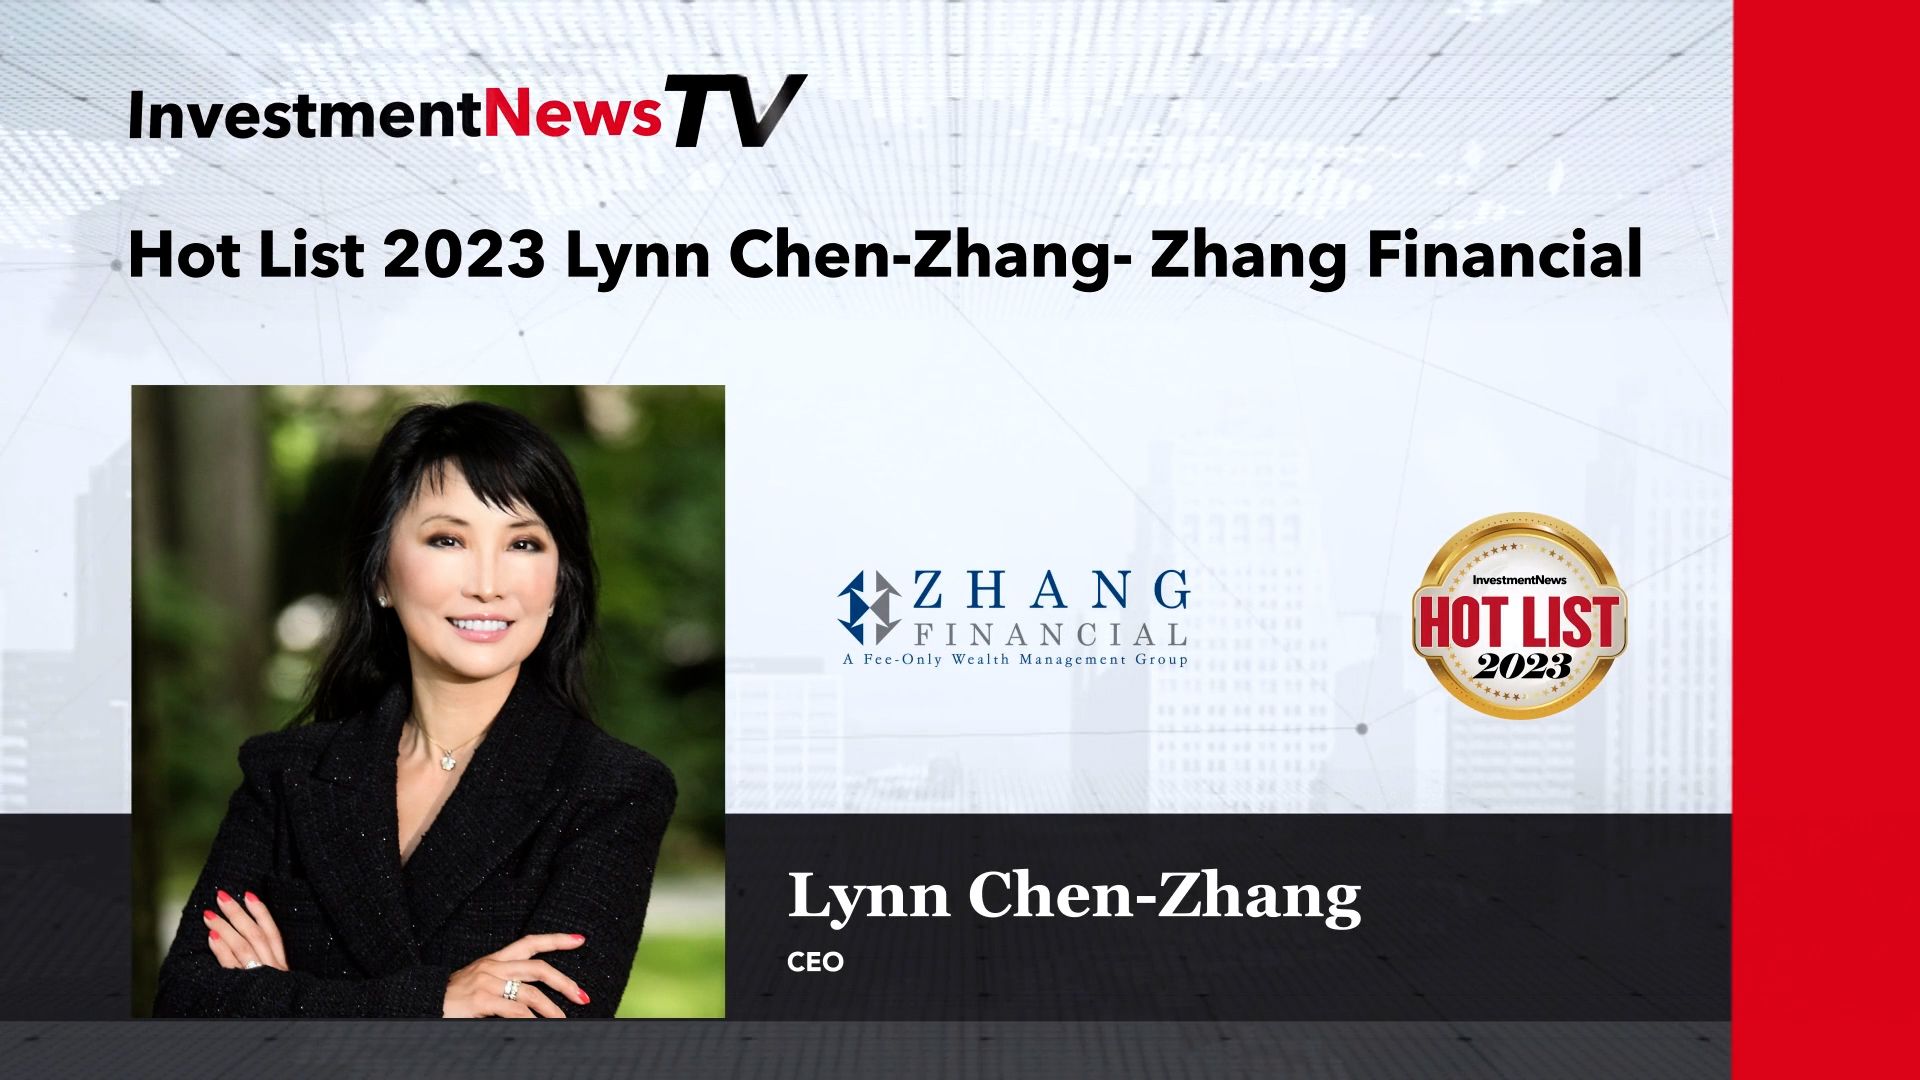 Trust at the heart of Zhang Financials’ success